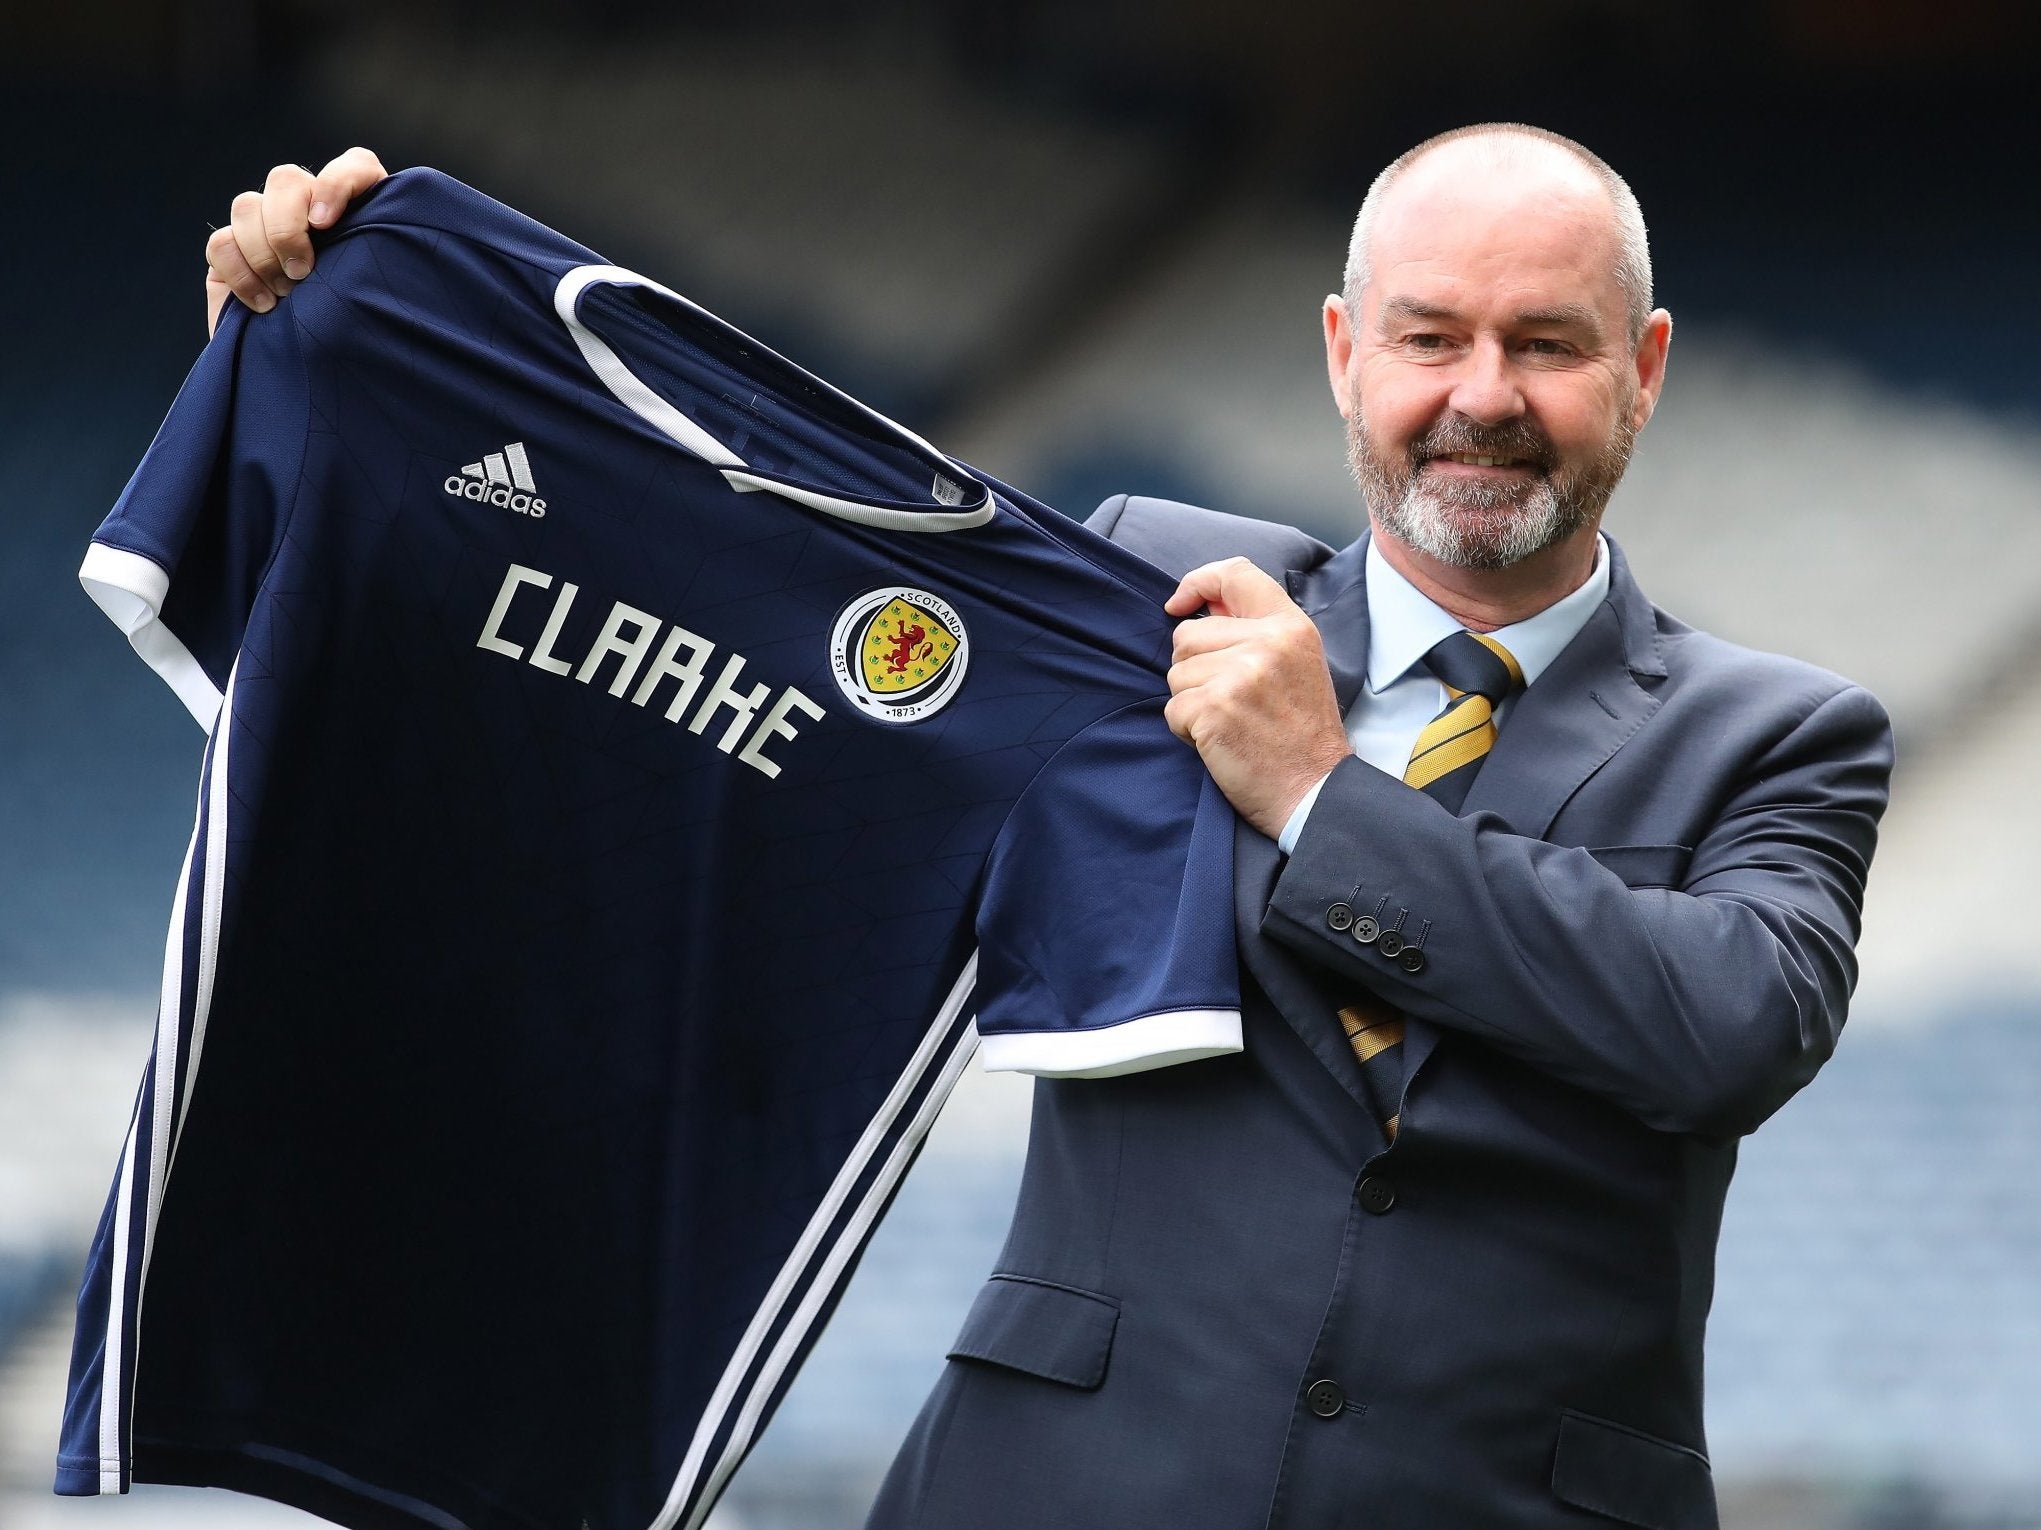 Steve Clarke poses with the Scotland international shirt